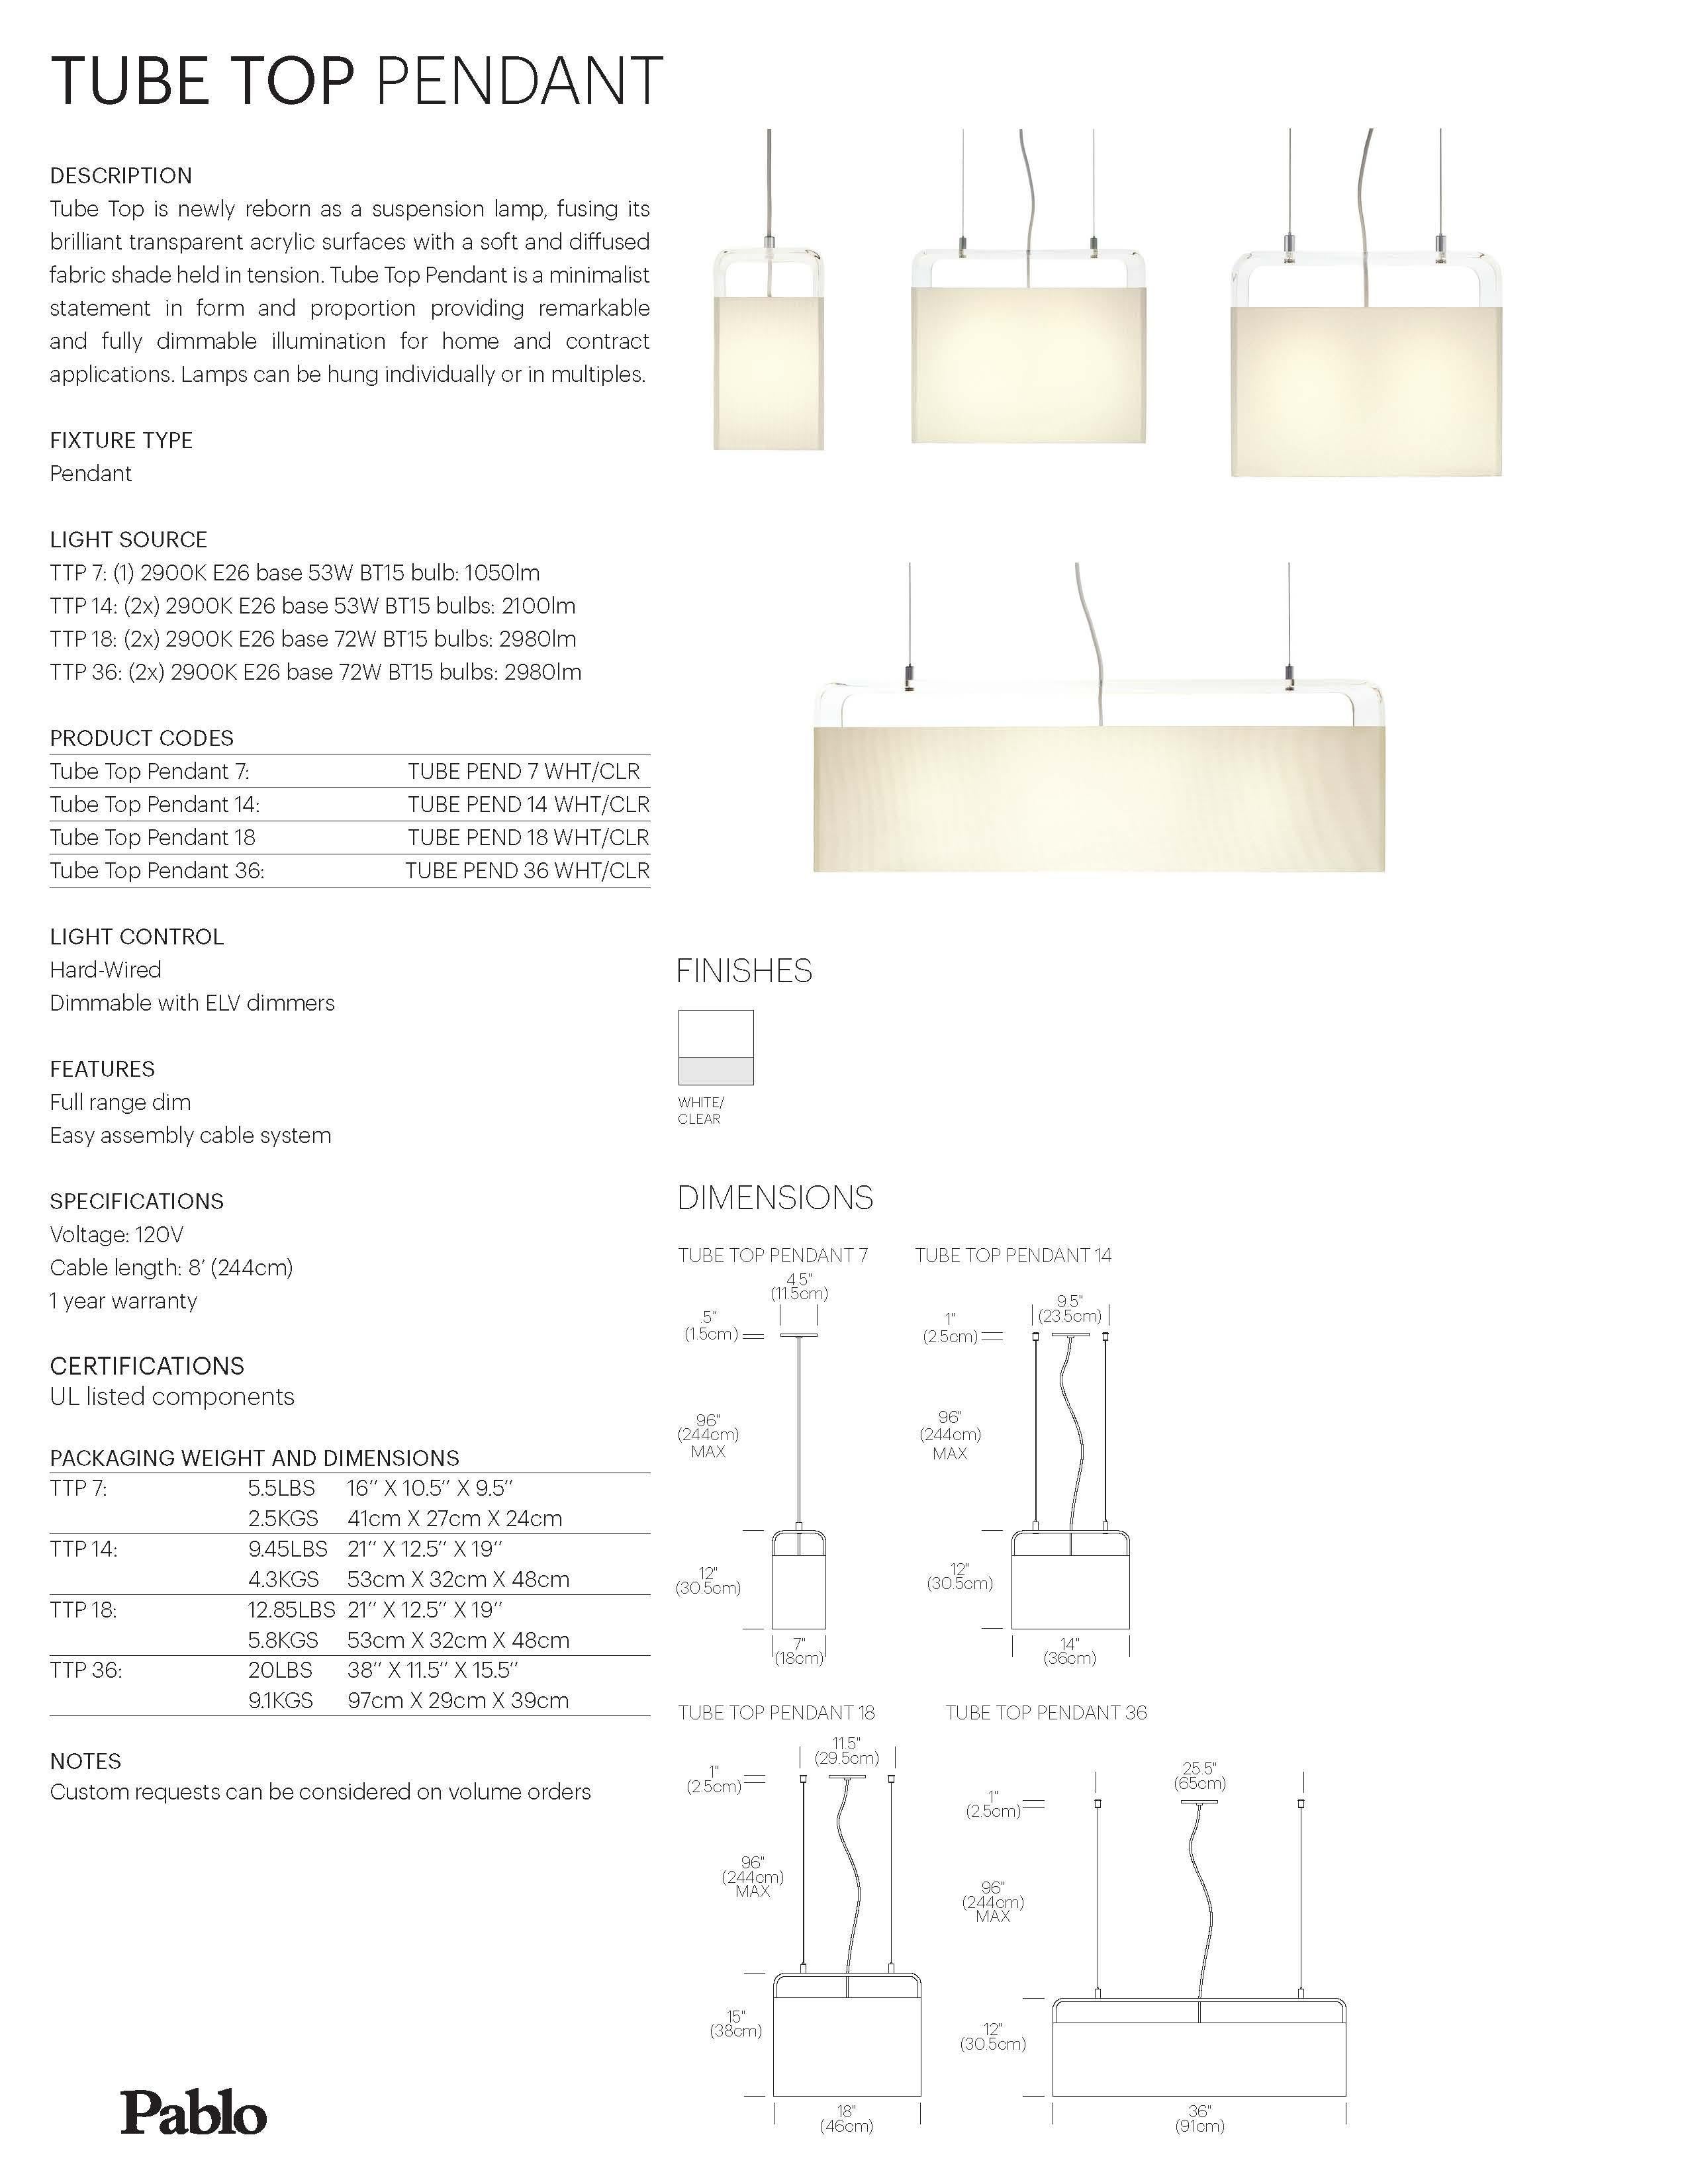 American Tubetop Pendant Light by Pablo Designs